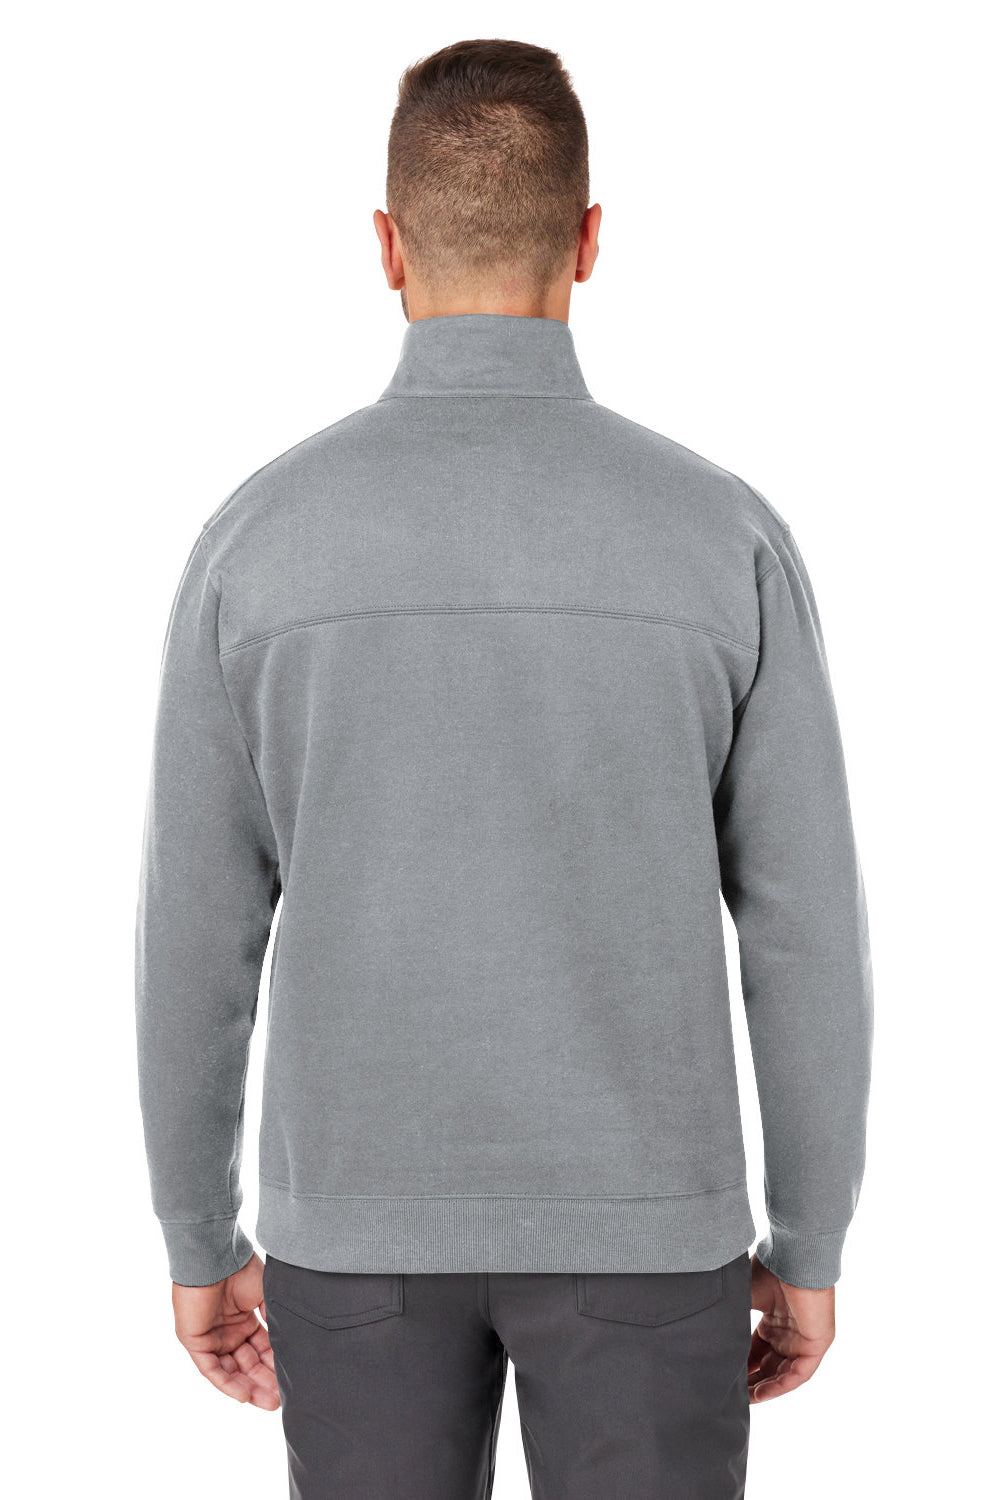 Columbia 1411621 Mens Hart Mountain Long Sleeve 1/4 Zip Sweater Heather Charcoal Grey Back